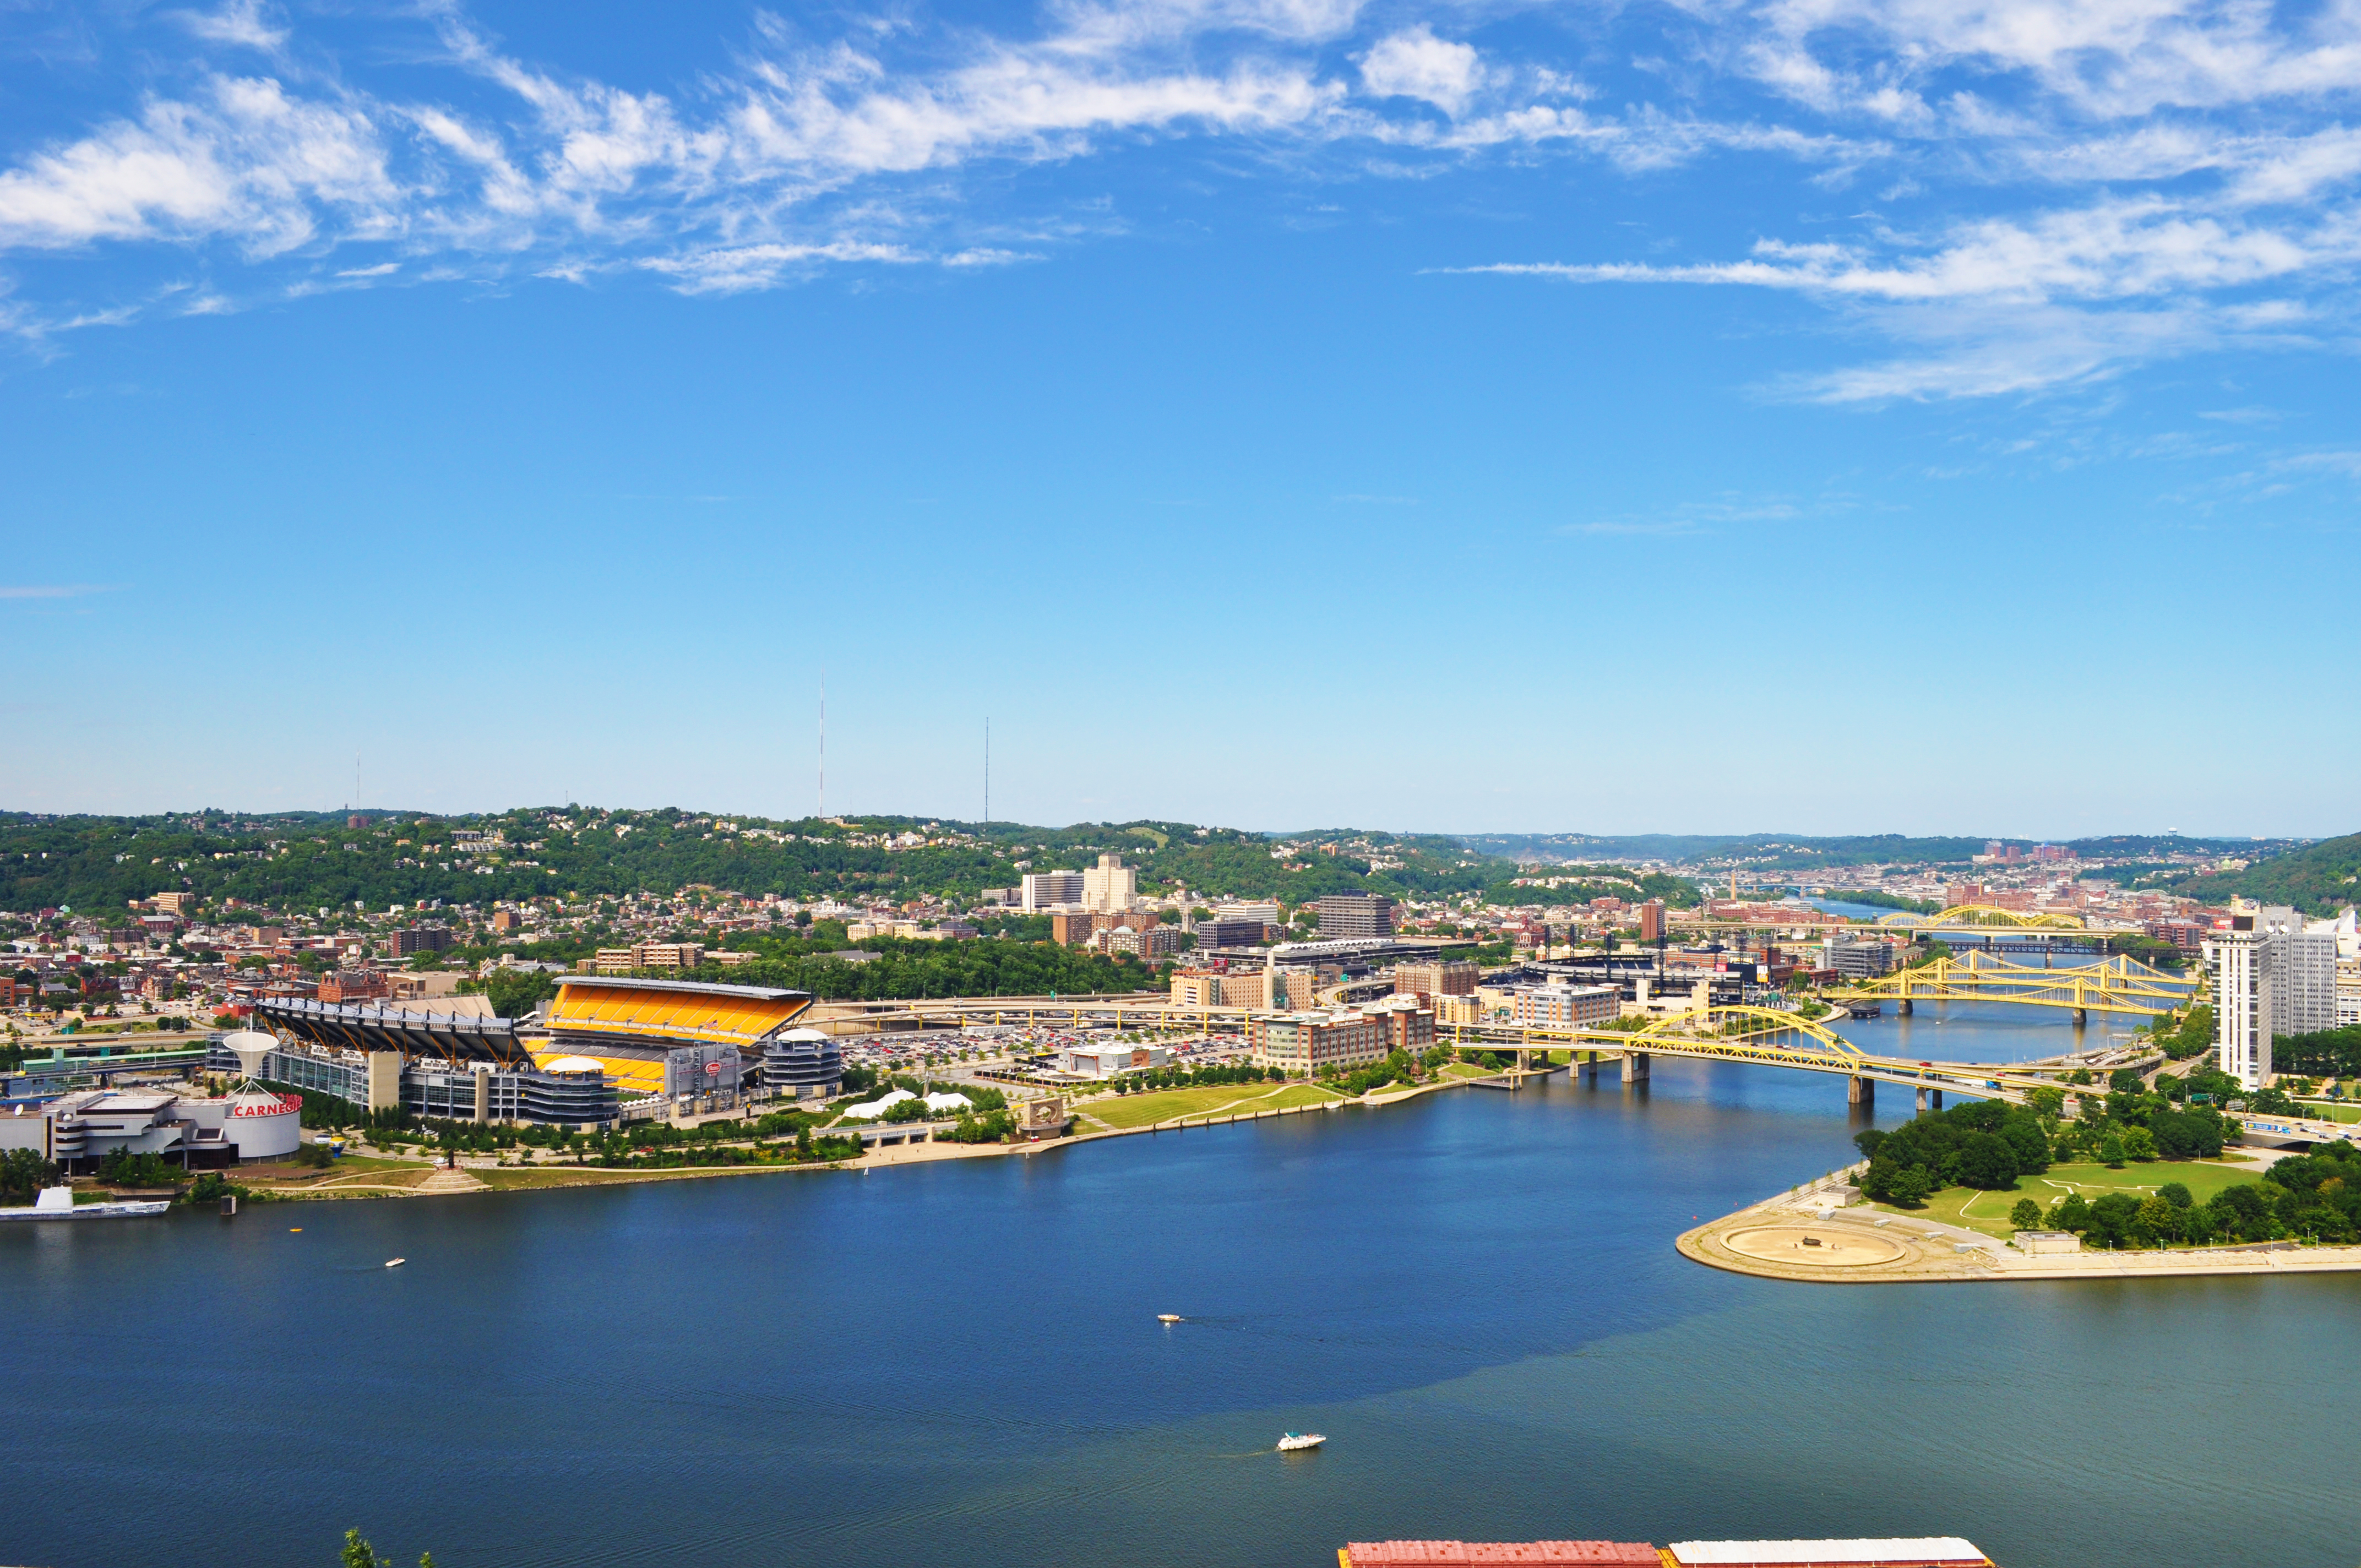 Pittsburgh's three rivers under sunny skies.